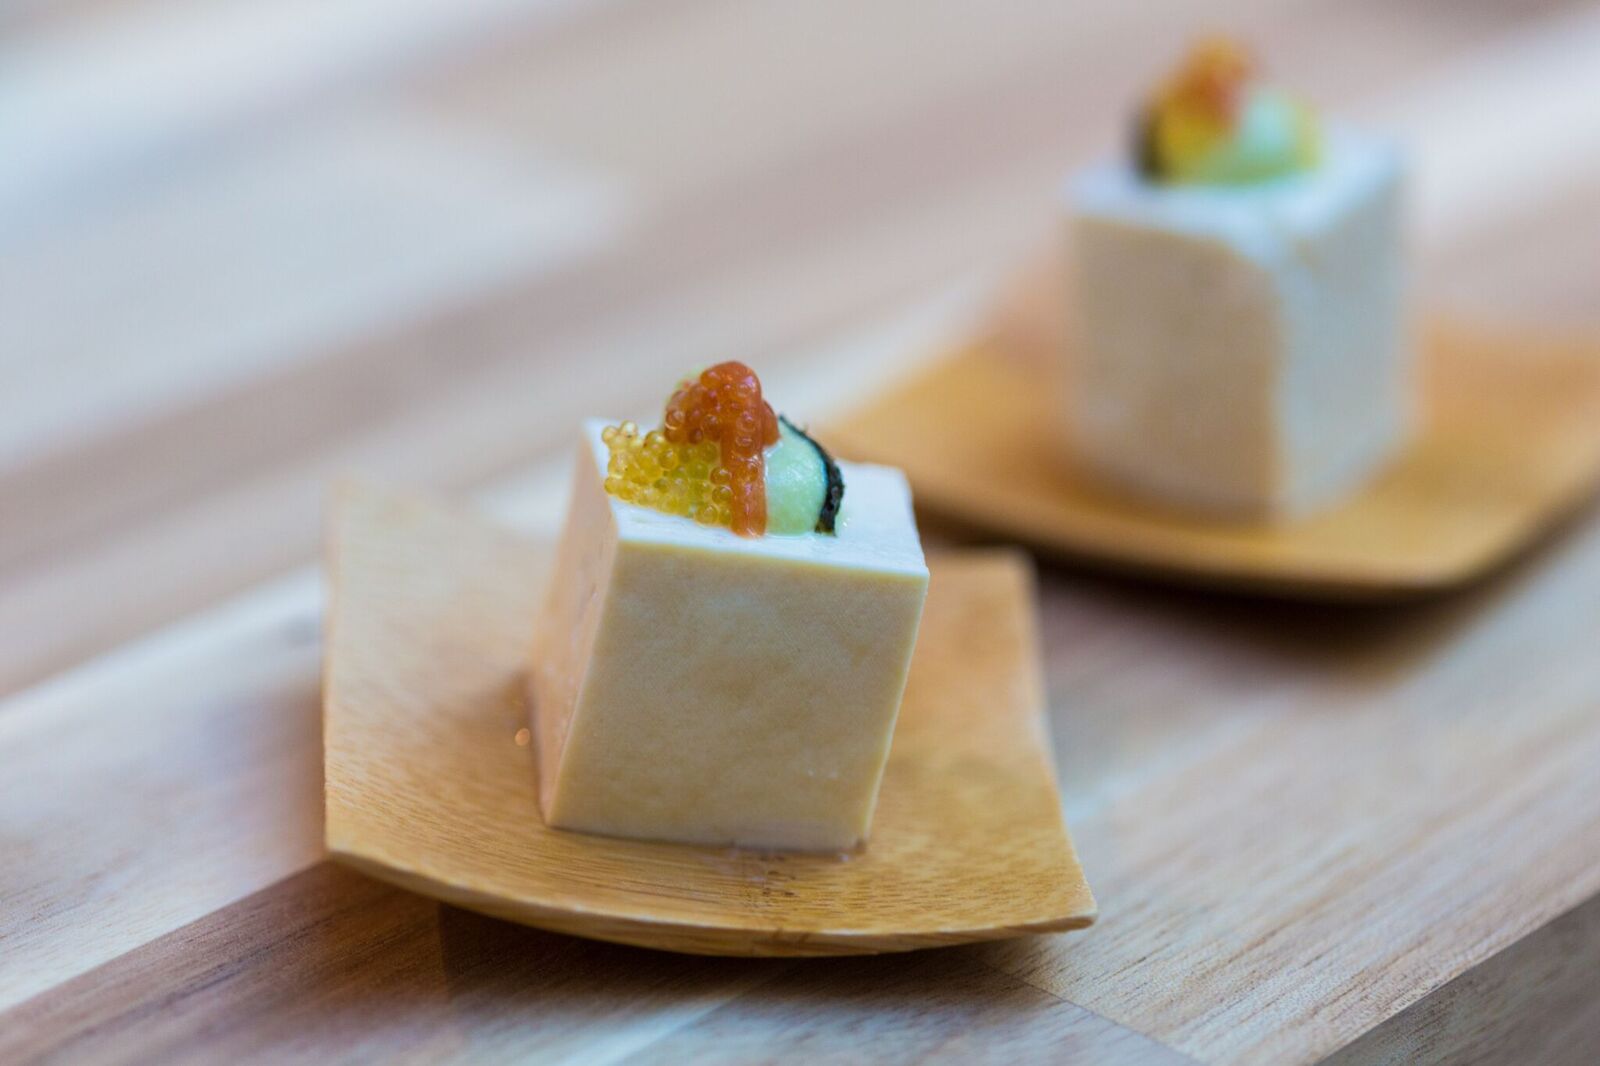 Minimalist preparation lets flavor of Hodo's fresh tofu shine through.